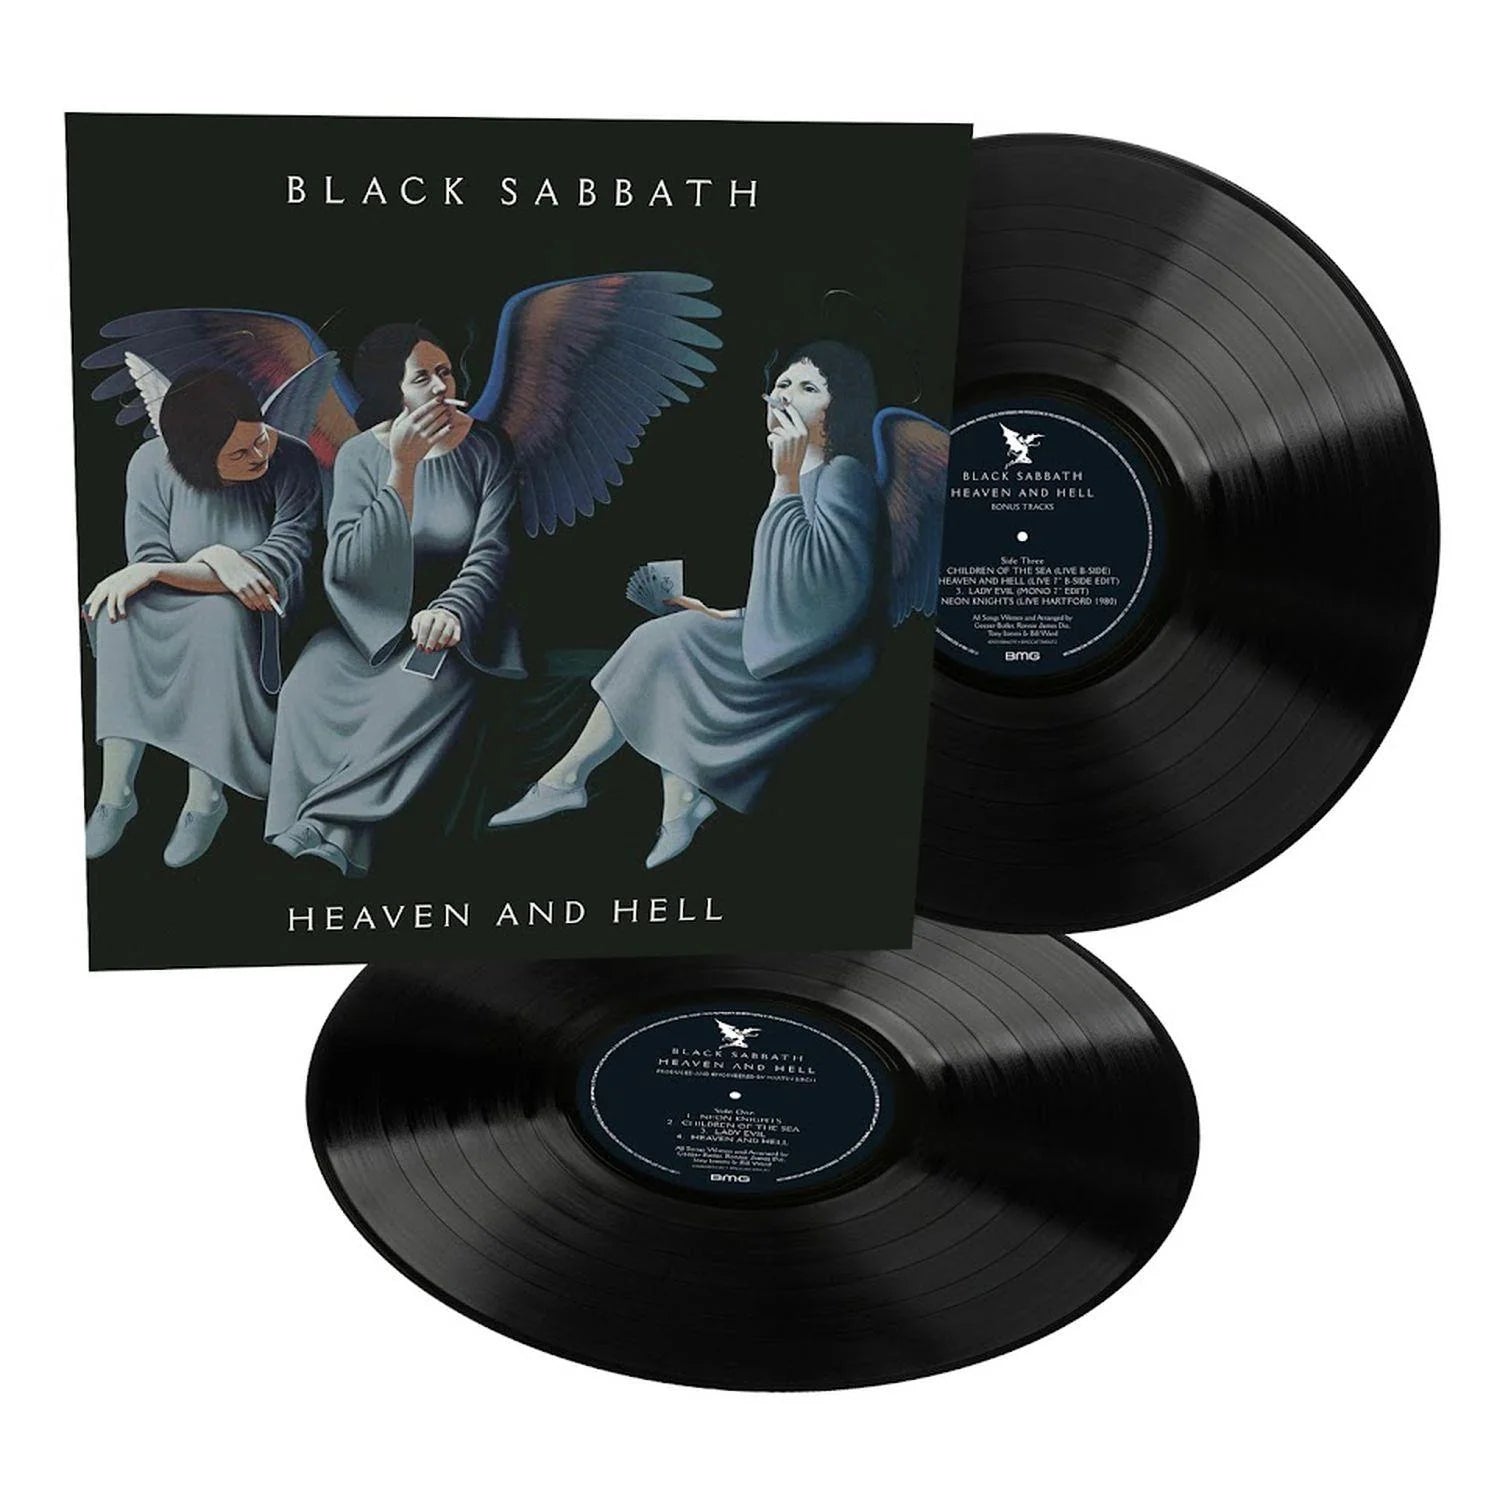 BLACK SABBATH - HEAVEN AND HELL - VINYL - 2LP - Wah Wah Records